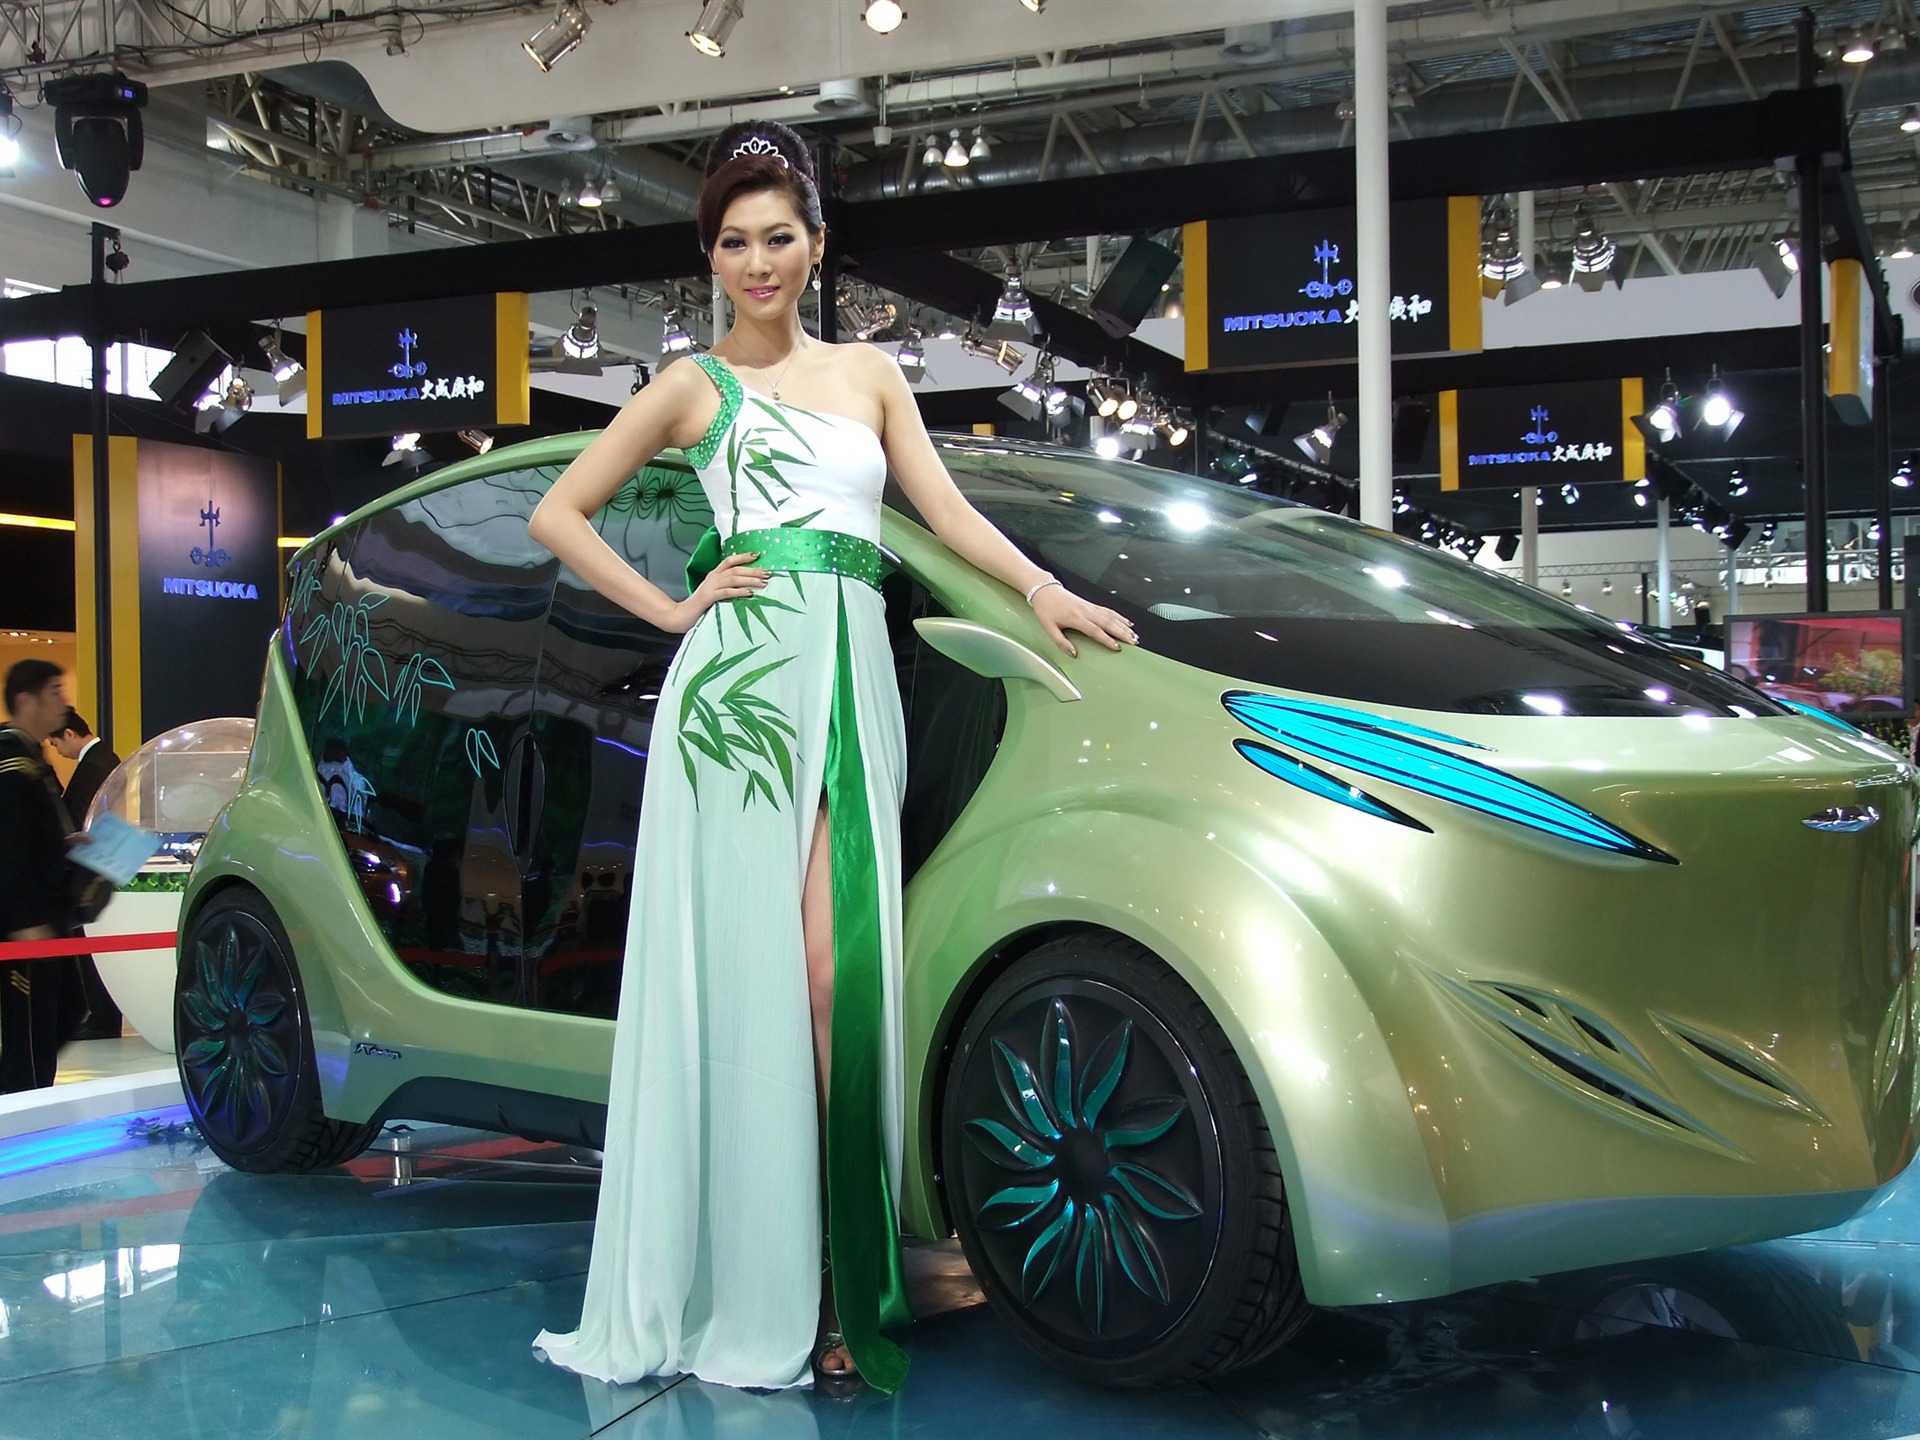 2010 Peking autosalonu modely aut odběrem (2) #2 - 1920x1440